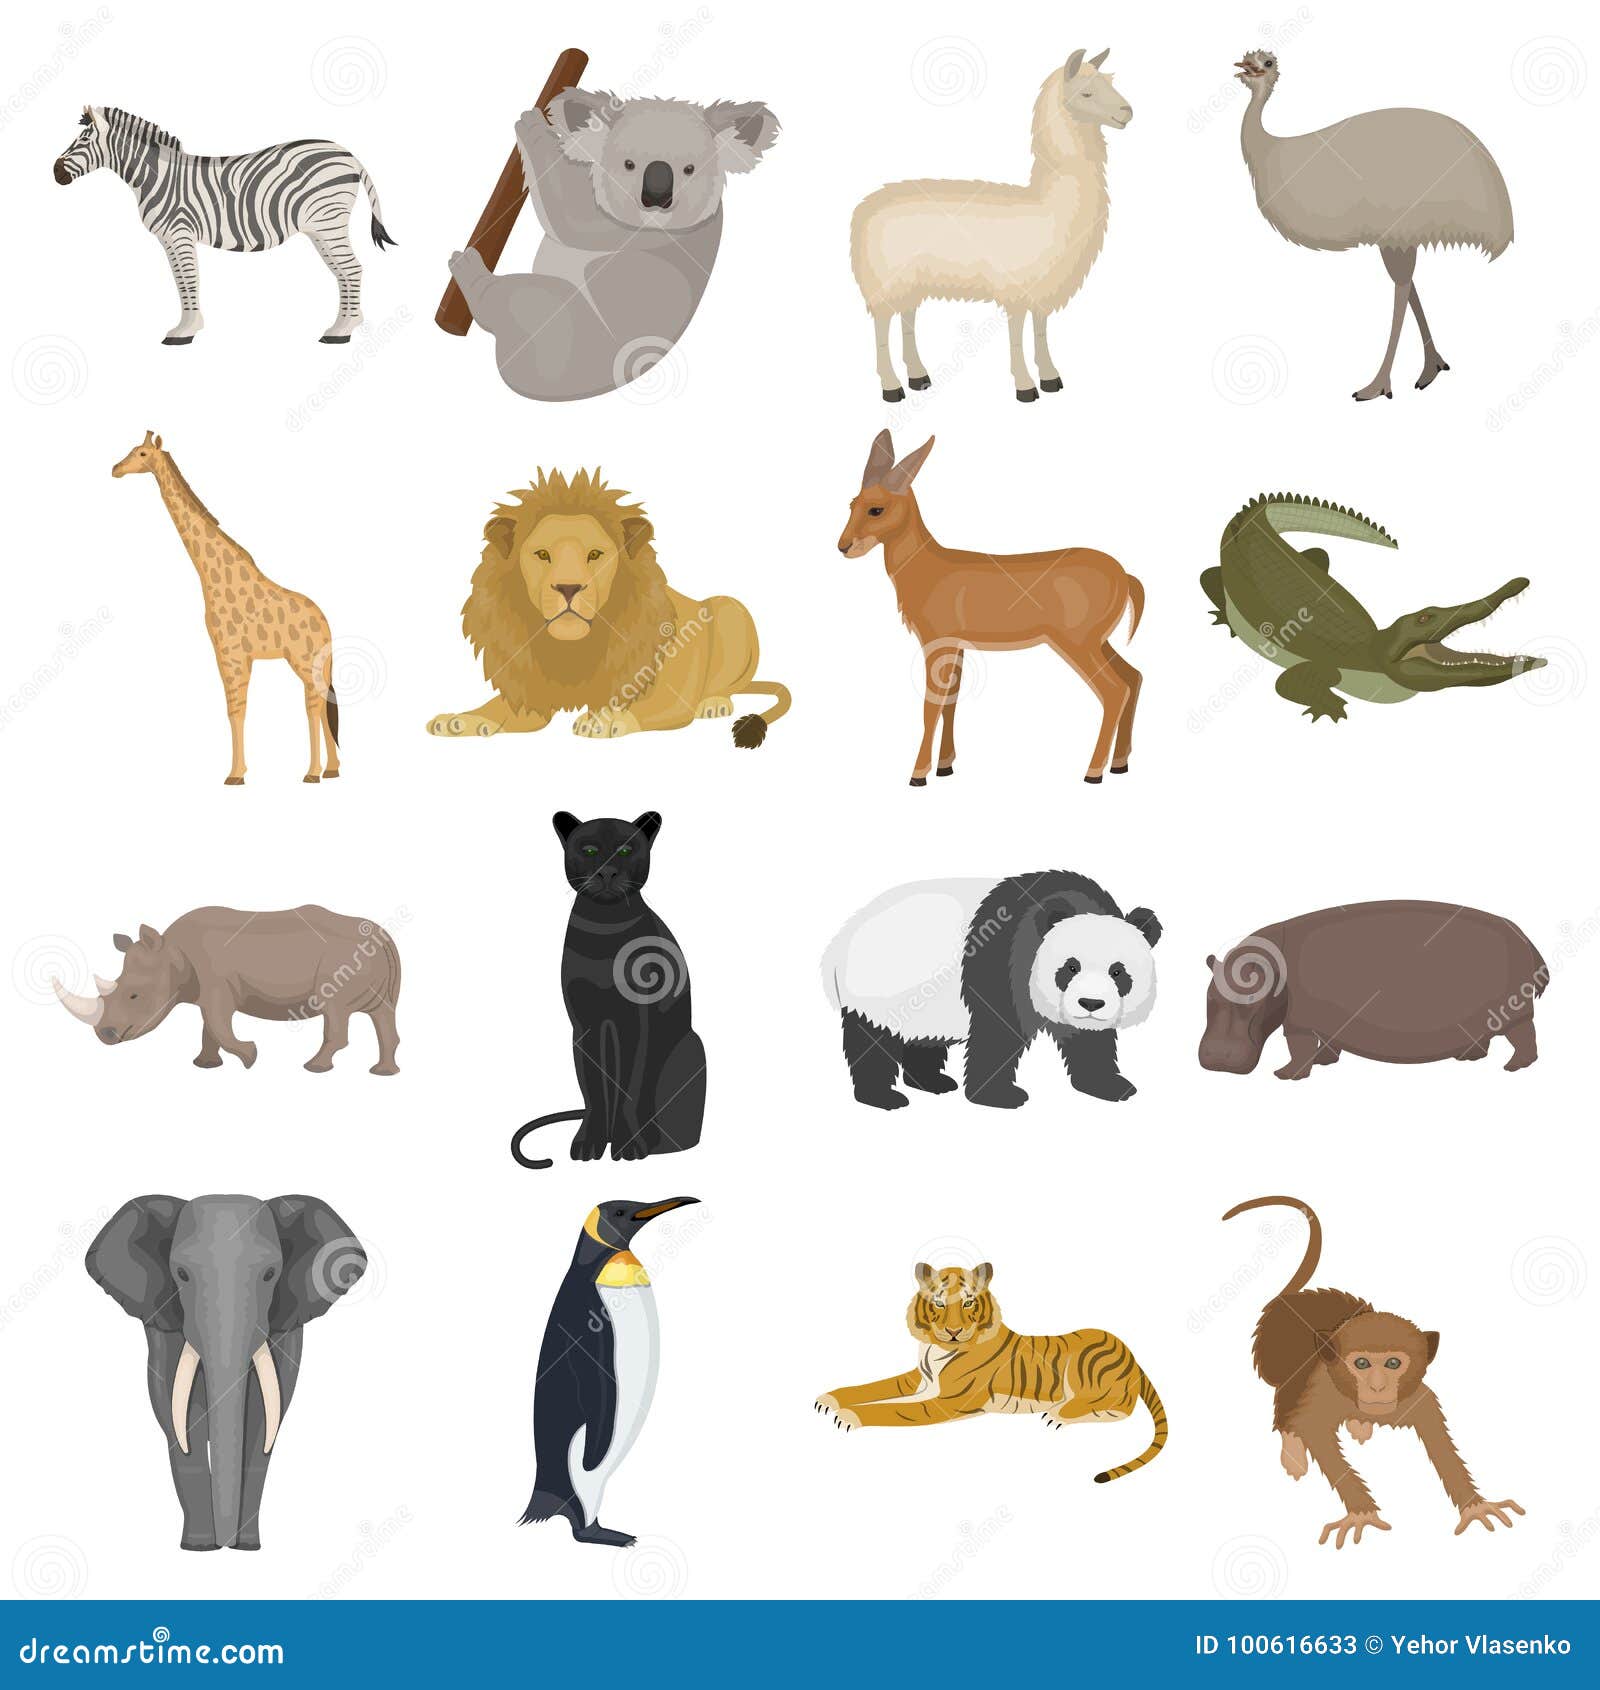 ostrich emu, crocodile, giraffe, tiger, penguin and other wild animals. artiodactyla, mammalian predators and animals